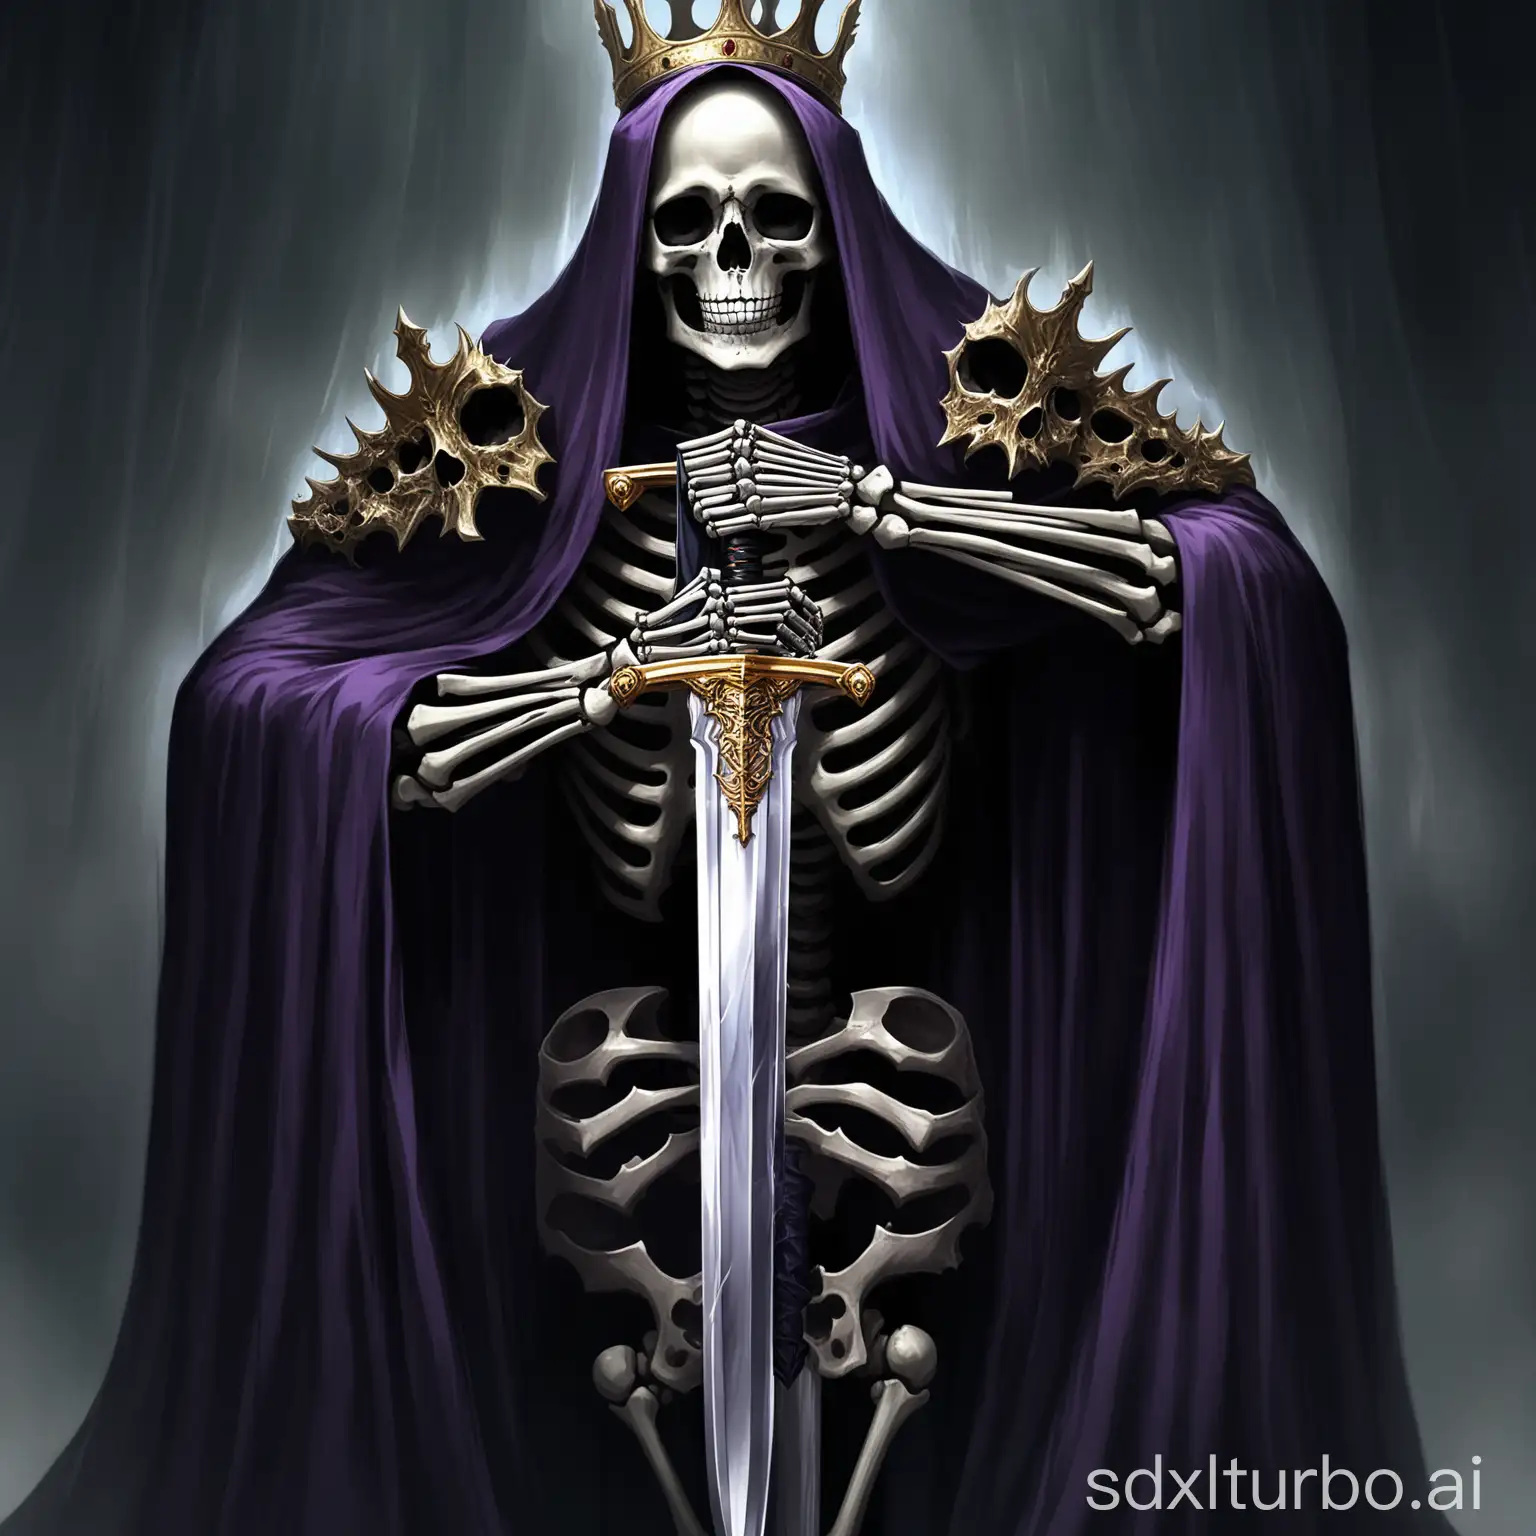 dark emperor skeleton king holds sword half covers face